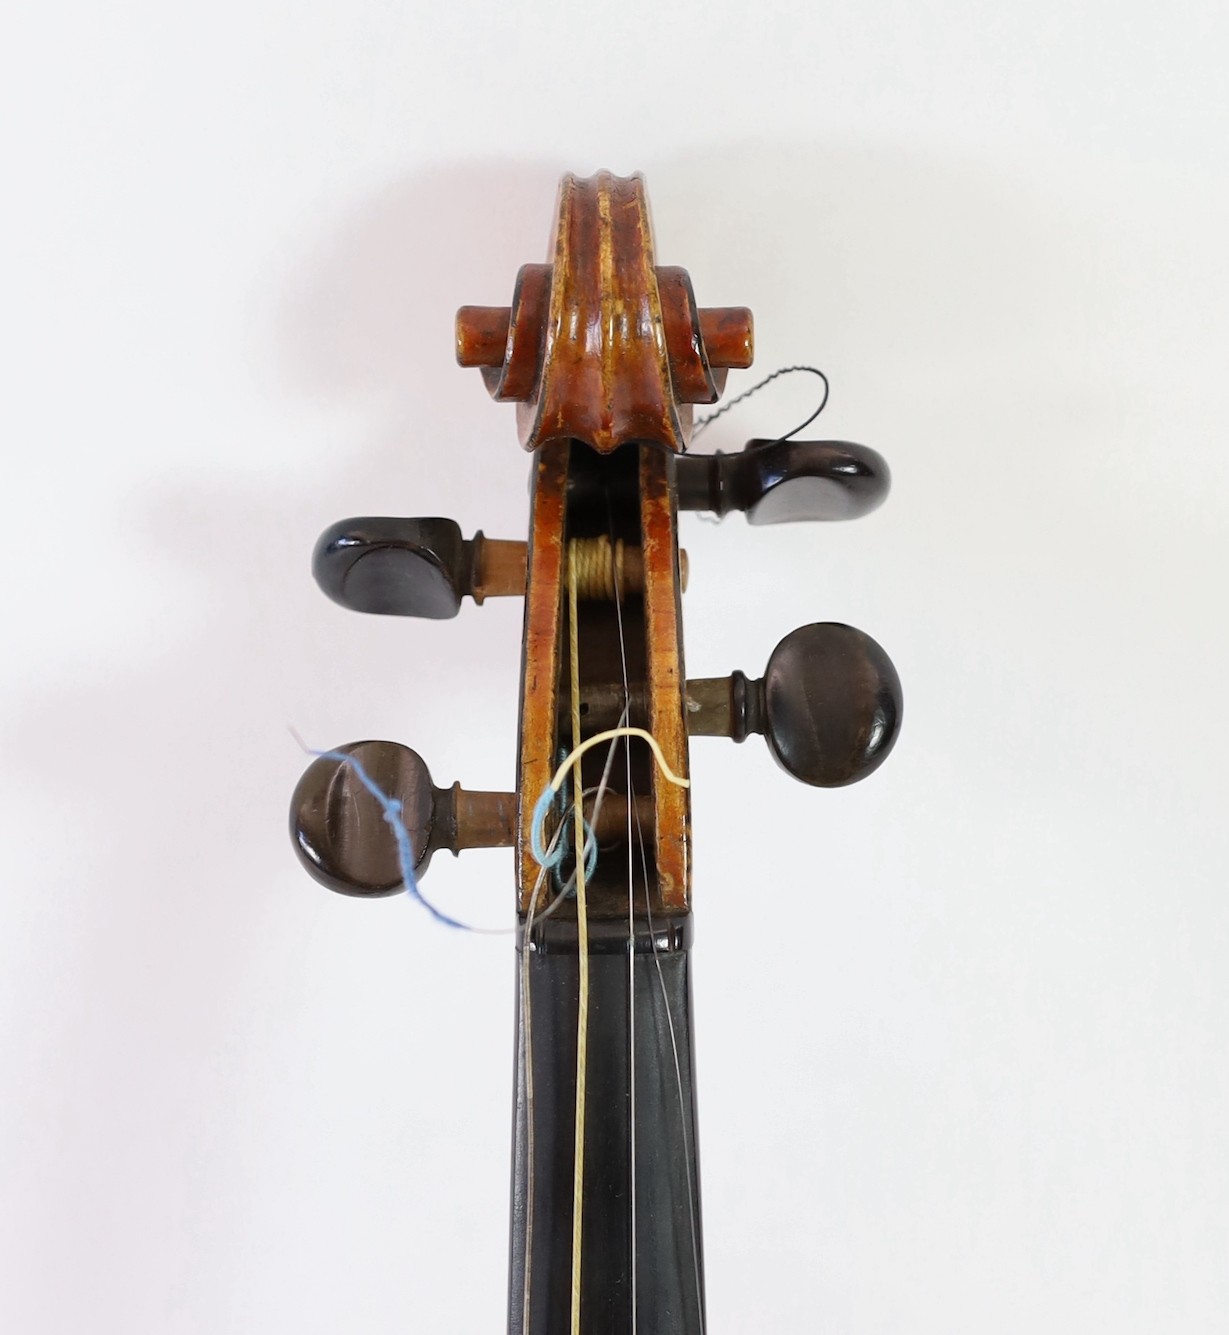 A 19th century French Grandjon school violin, labelled Joseph Guarnerins fecit Cremonae anno 1719 IHS, length of back 35.5 cm (14in.), cased